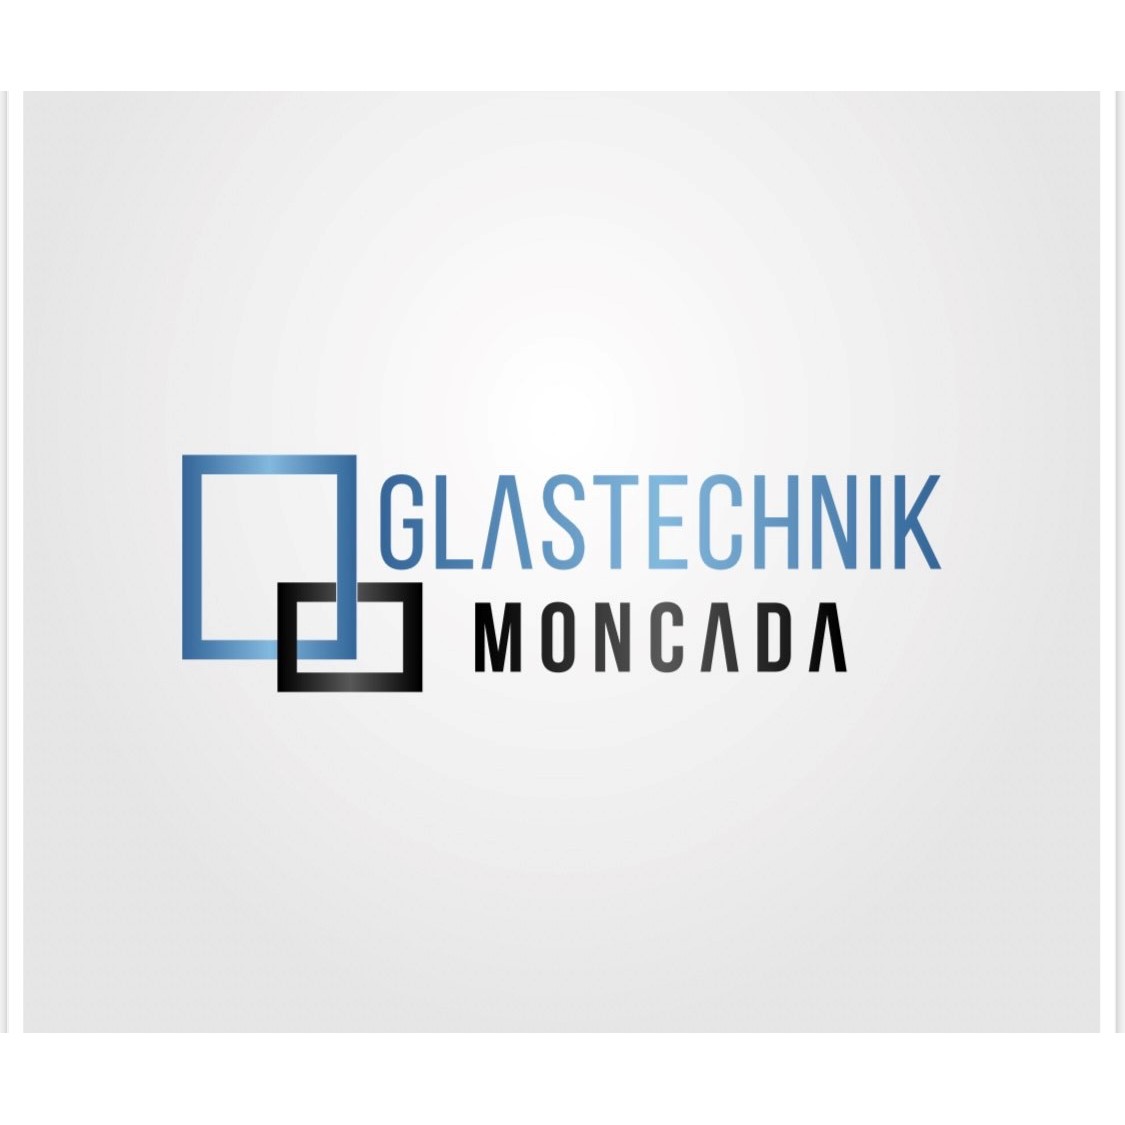 Glastechnik Moncada Logo